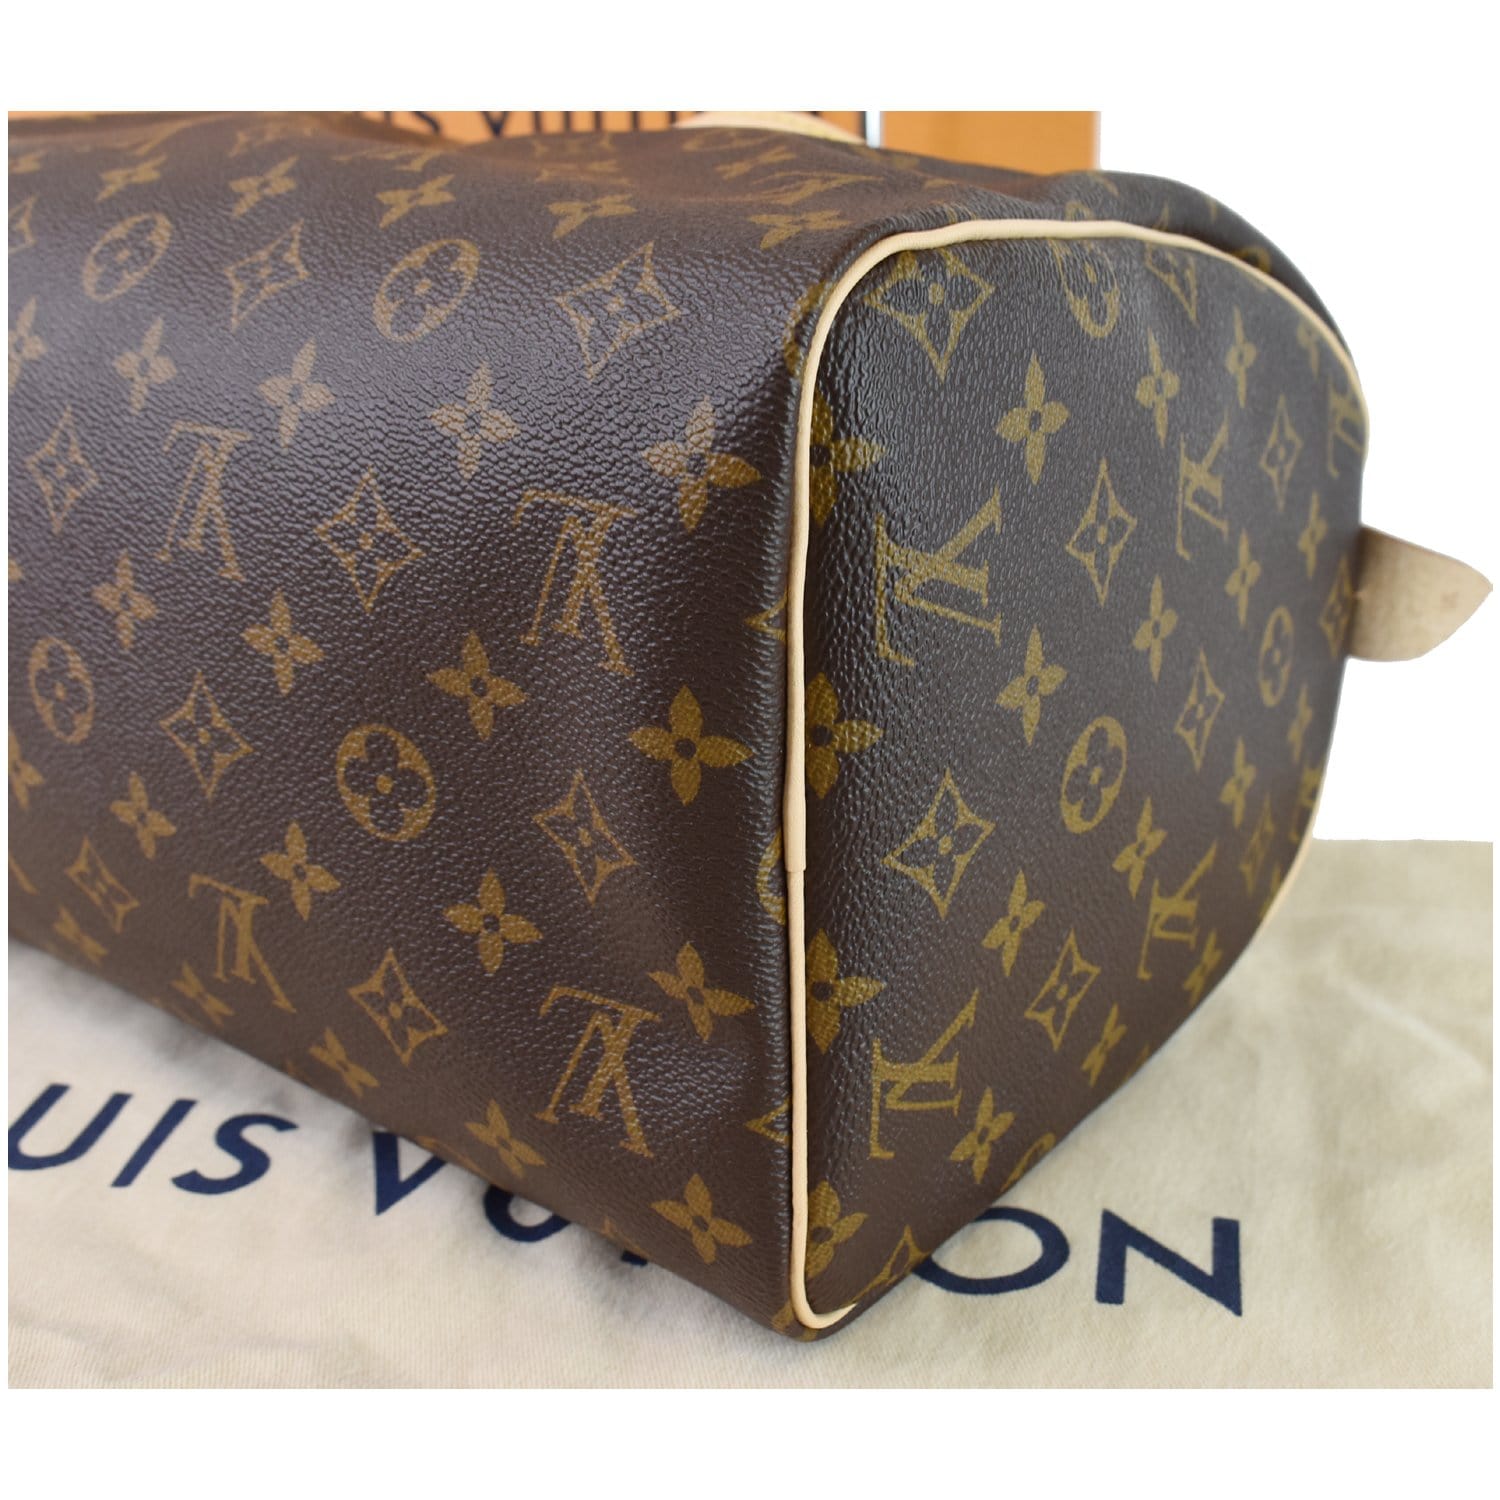 Louis Vuitton Pre-Owned Monogram Canvas Leather Speedy 30 cm Bag